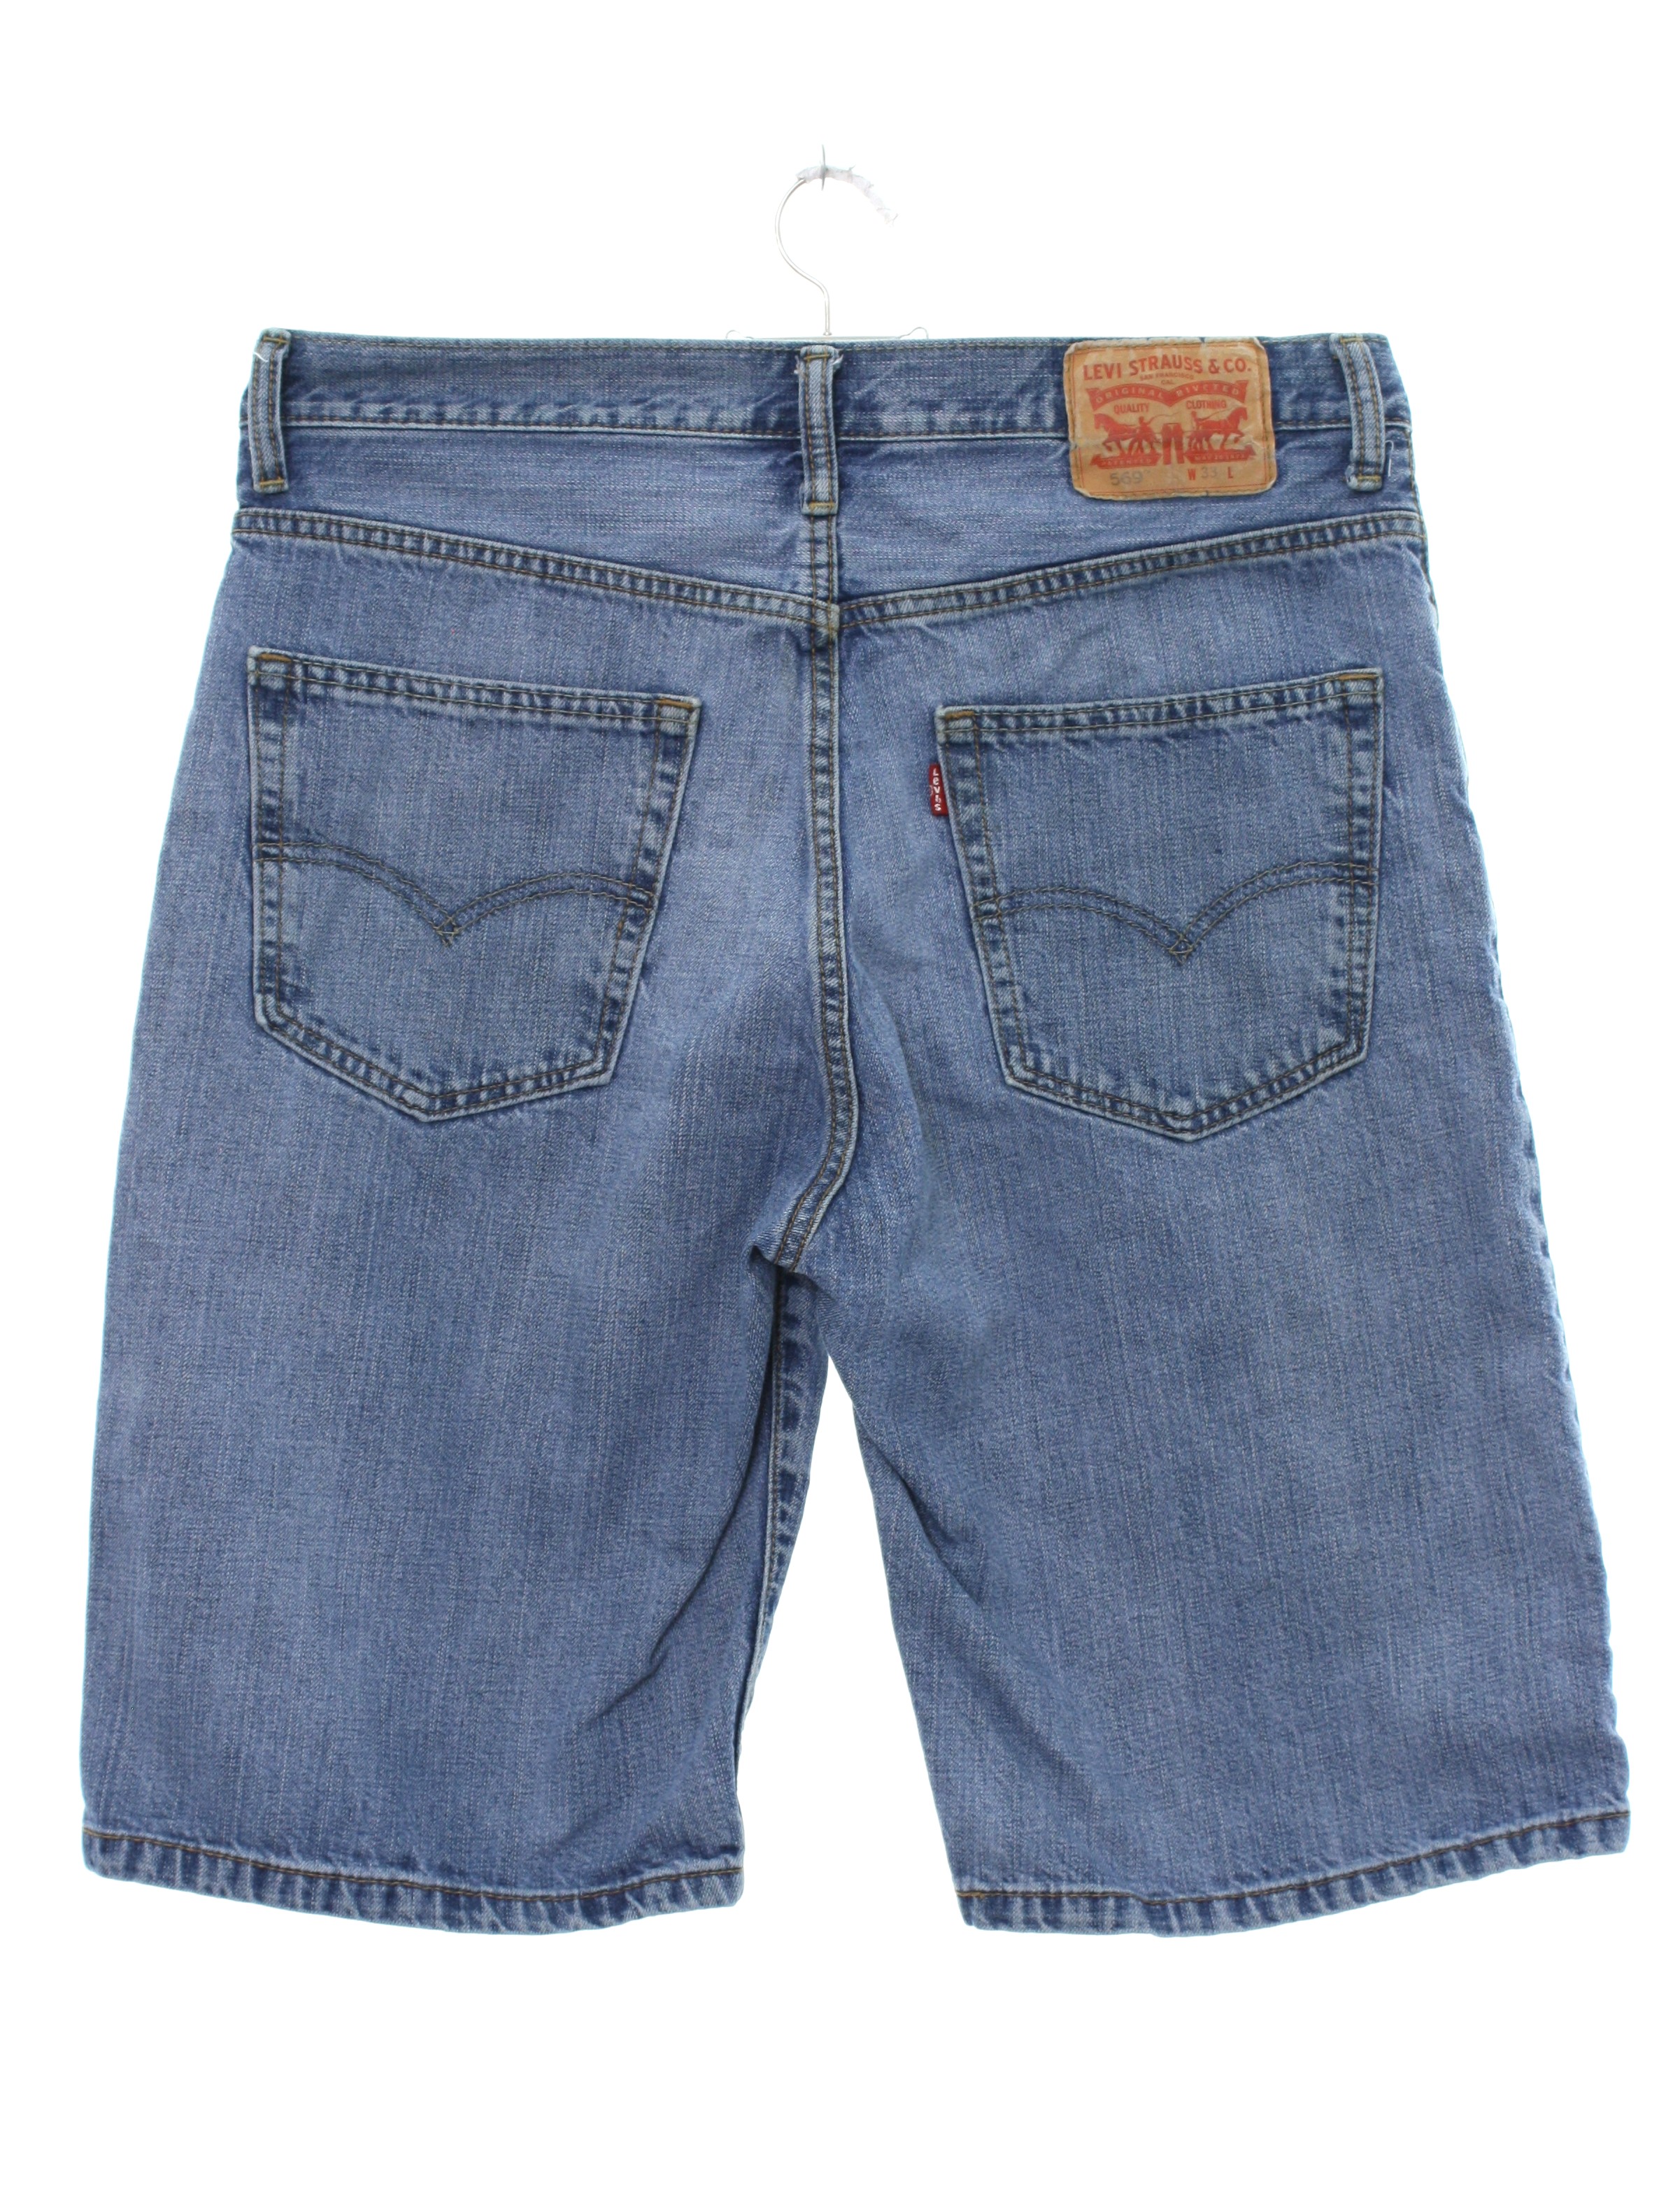 jean shorts 90s mens